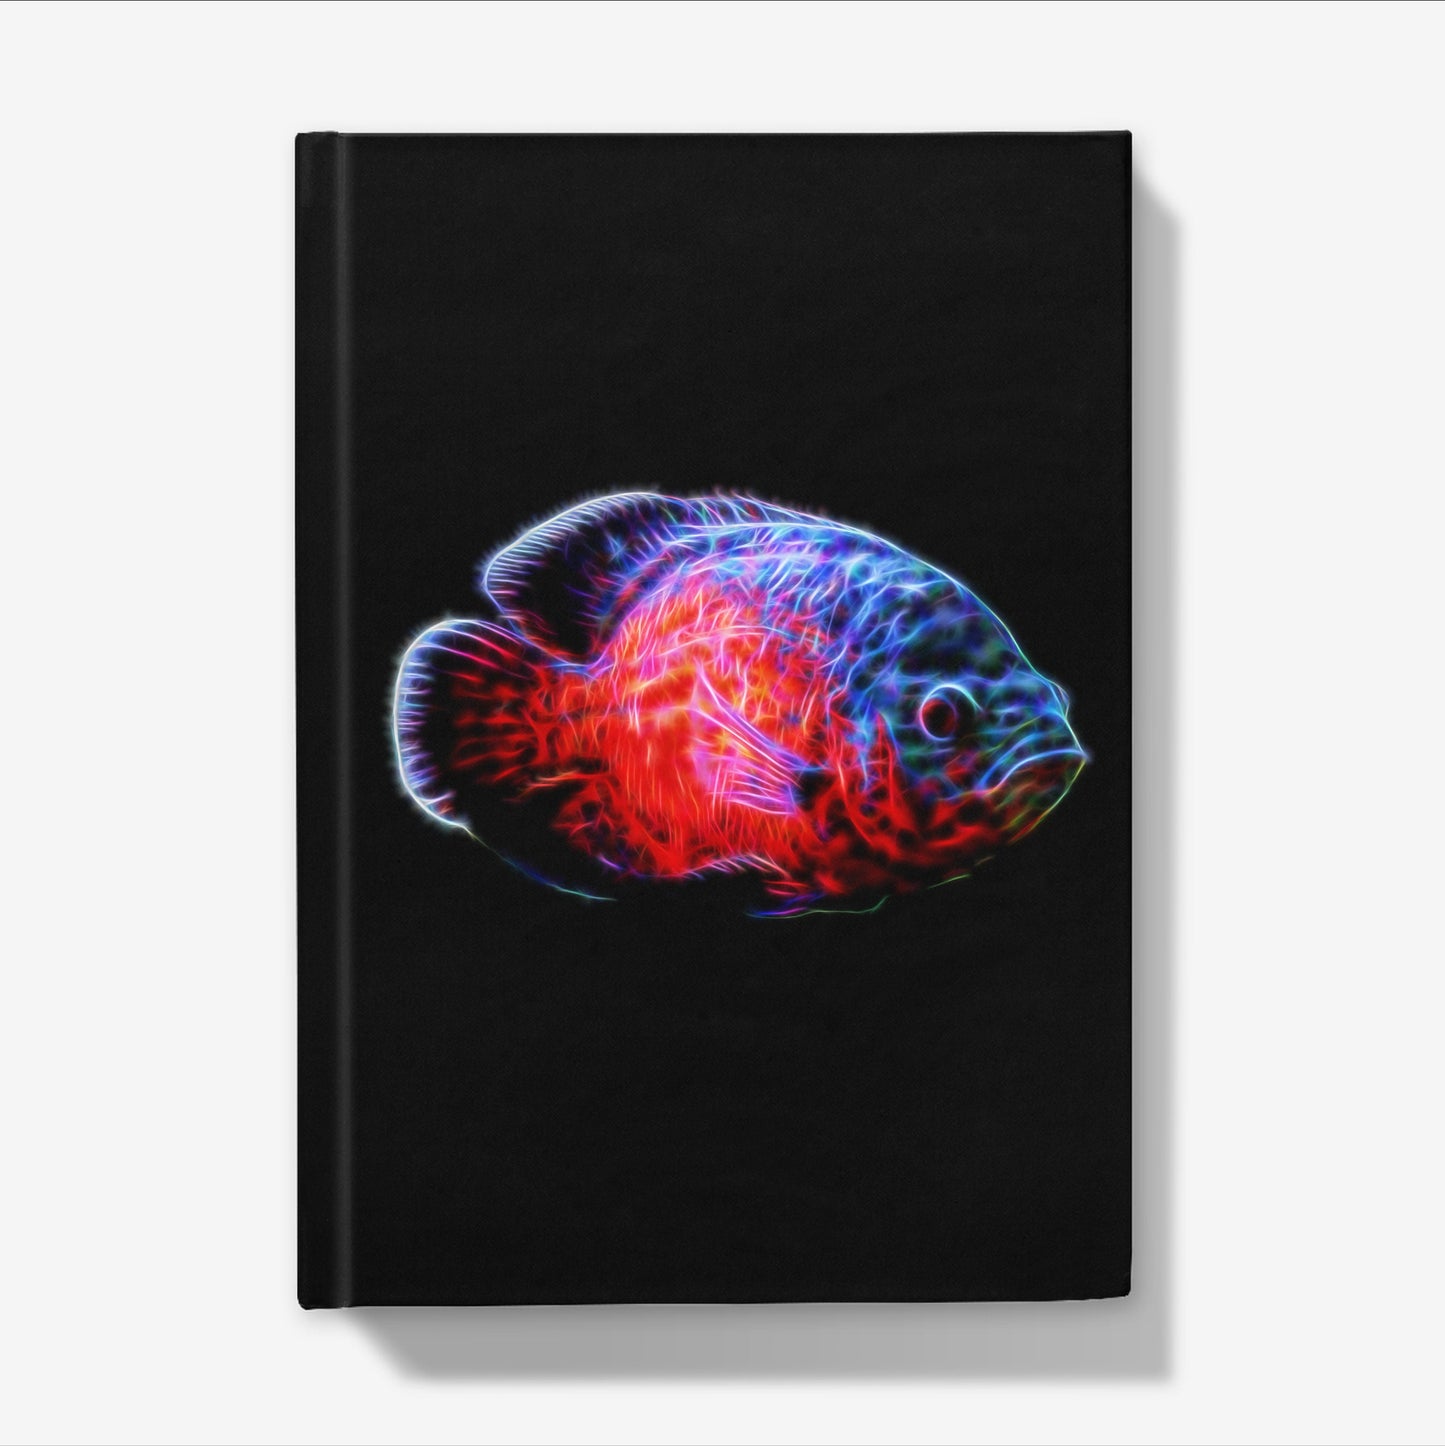 Oscar Cichlid A5 Hardback Journal with Stunning Fractal Art Designs.